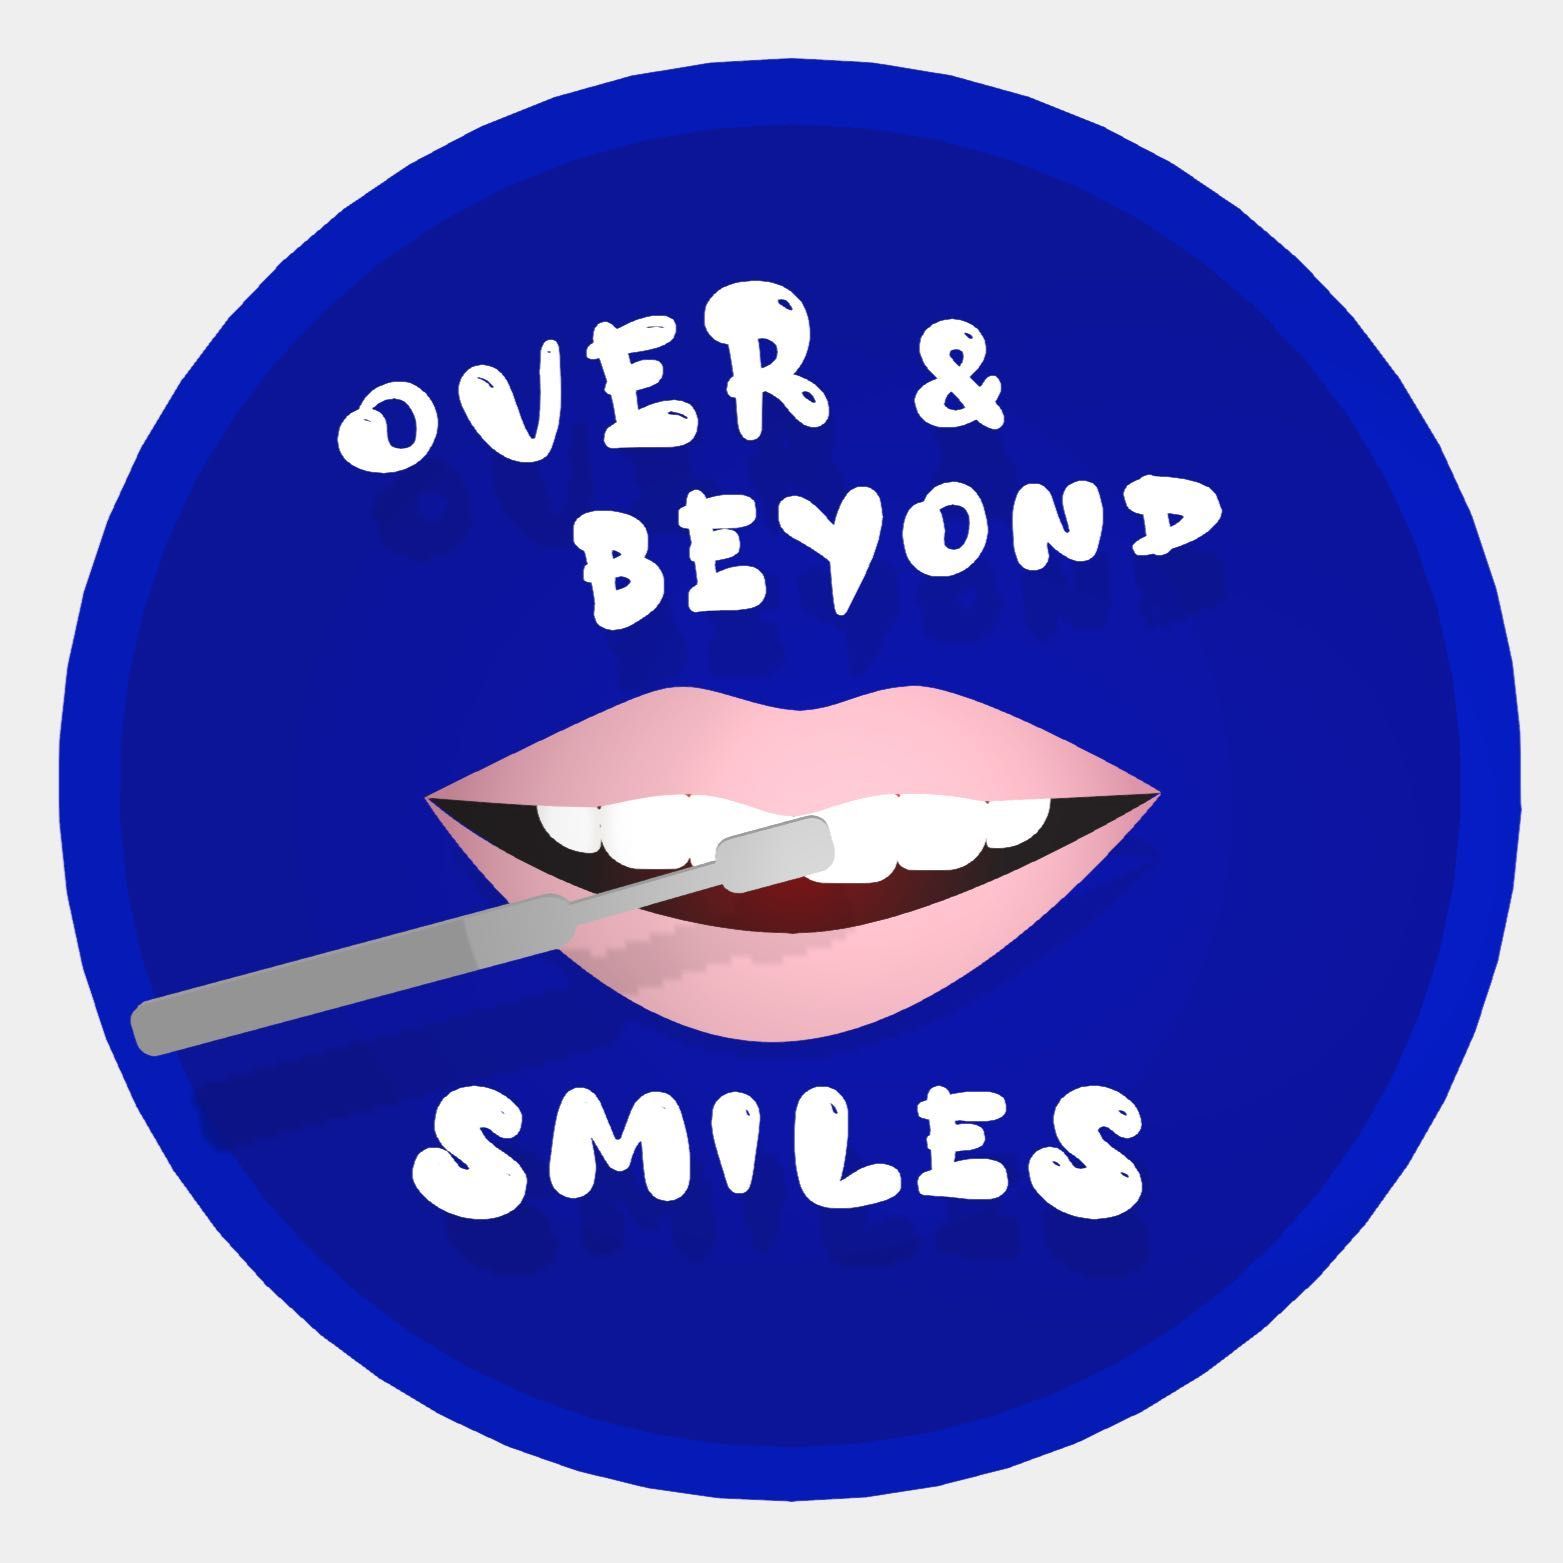 Over & Beyond Smiles, 00, Marietta, 30067